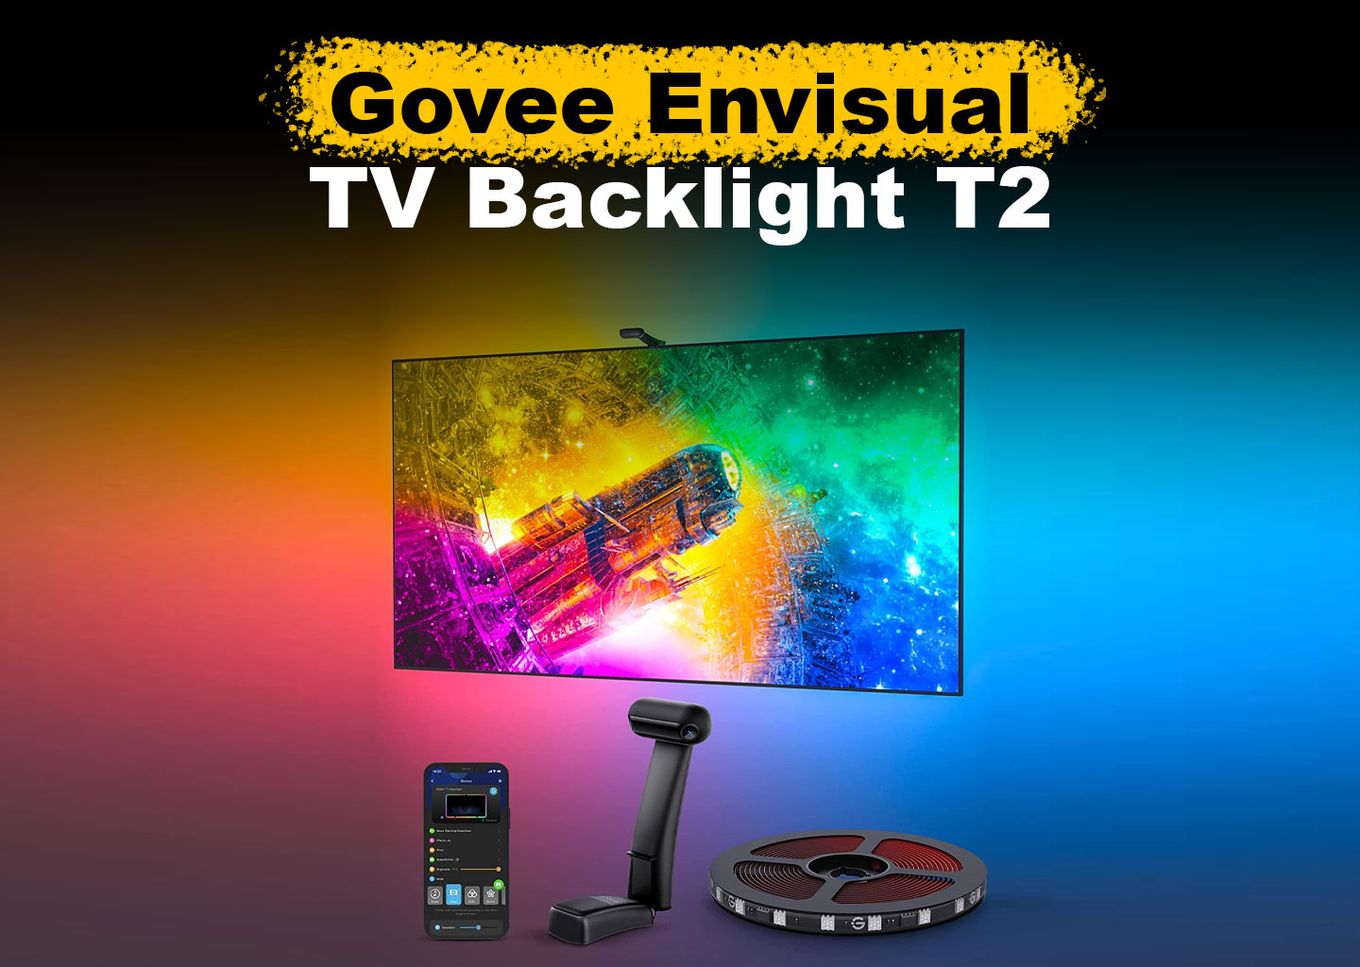 Govee TV Backlight T2 - The shining light